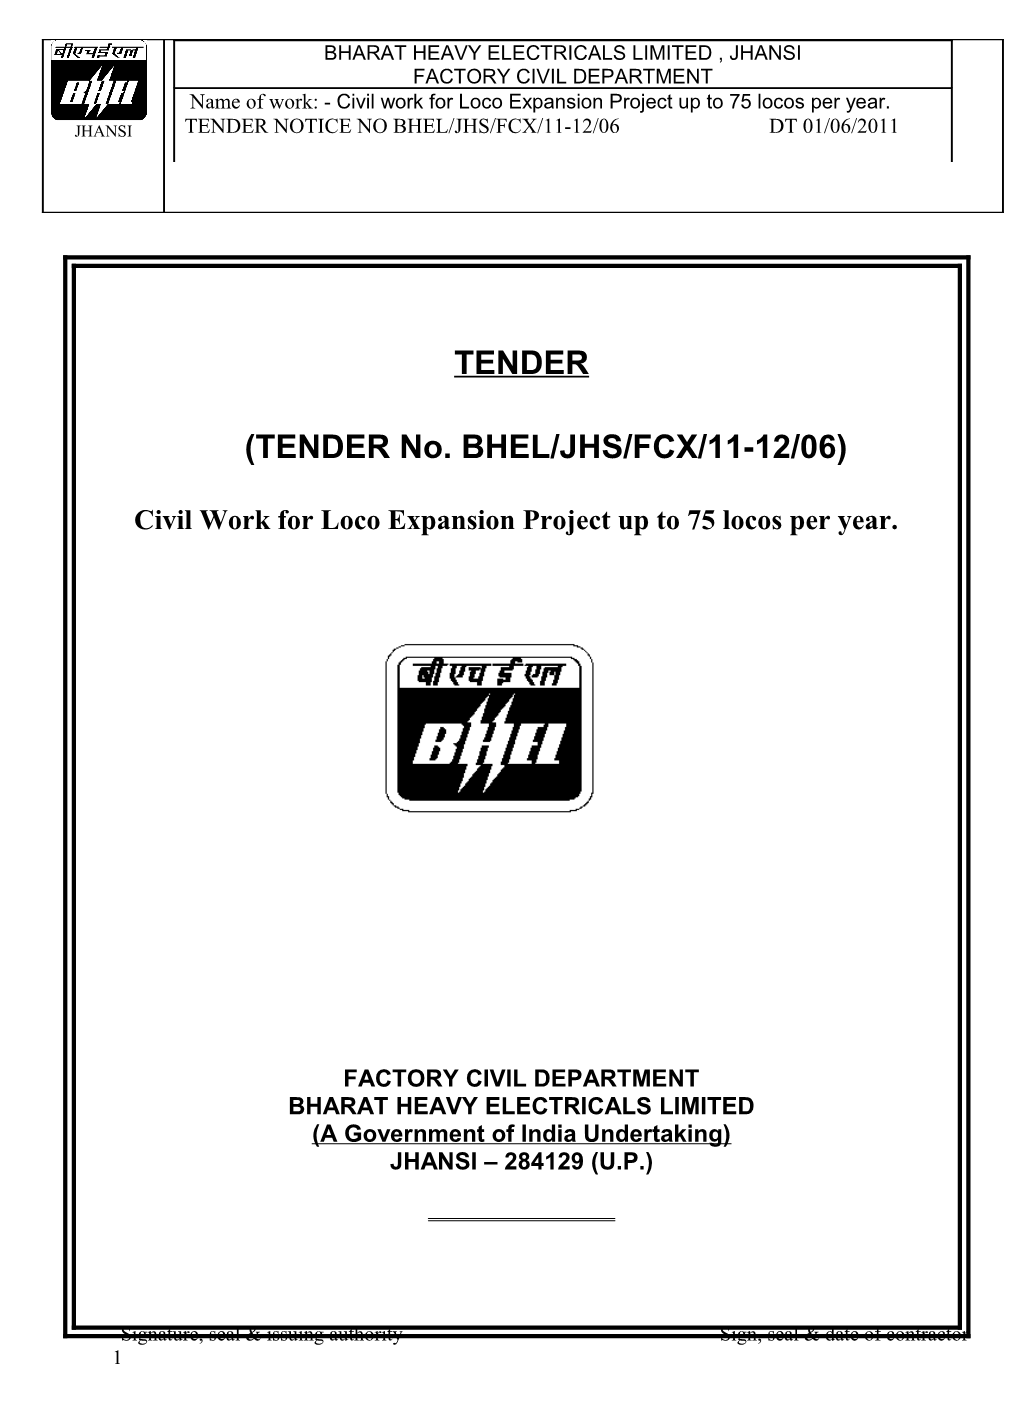 TENDER No. BHEL/JHS/FCX/11-12/06